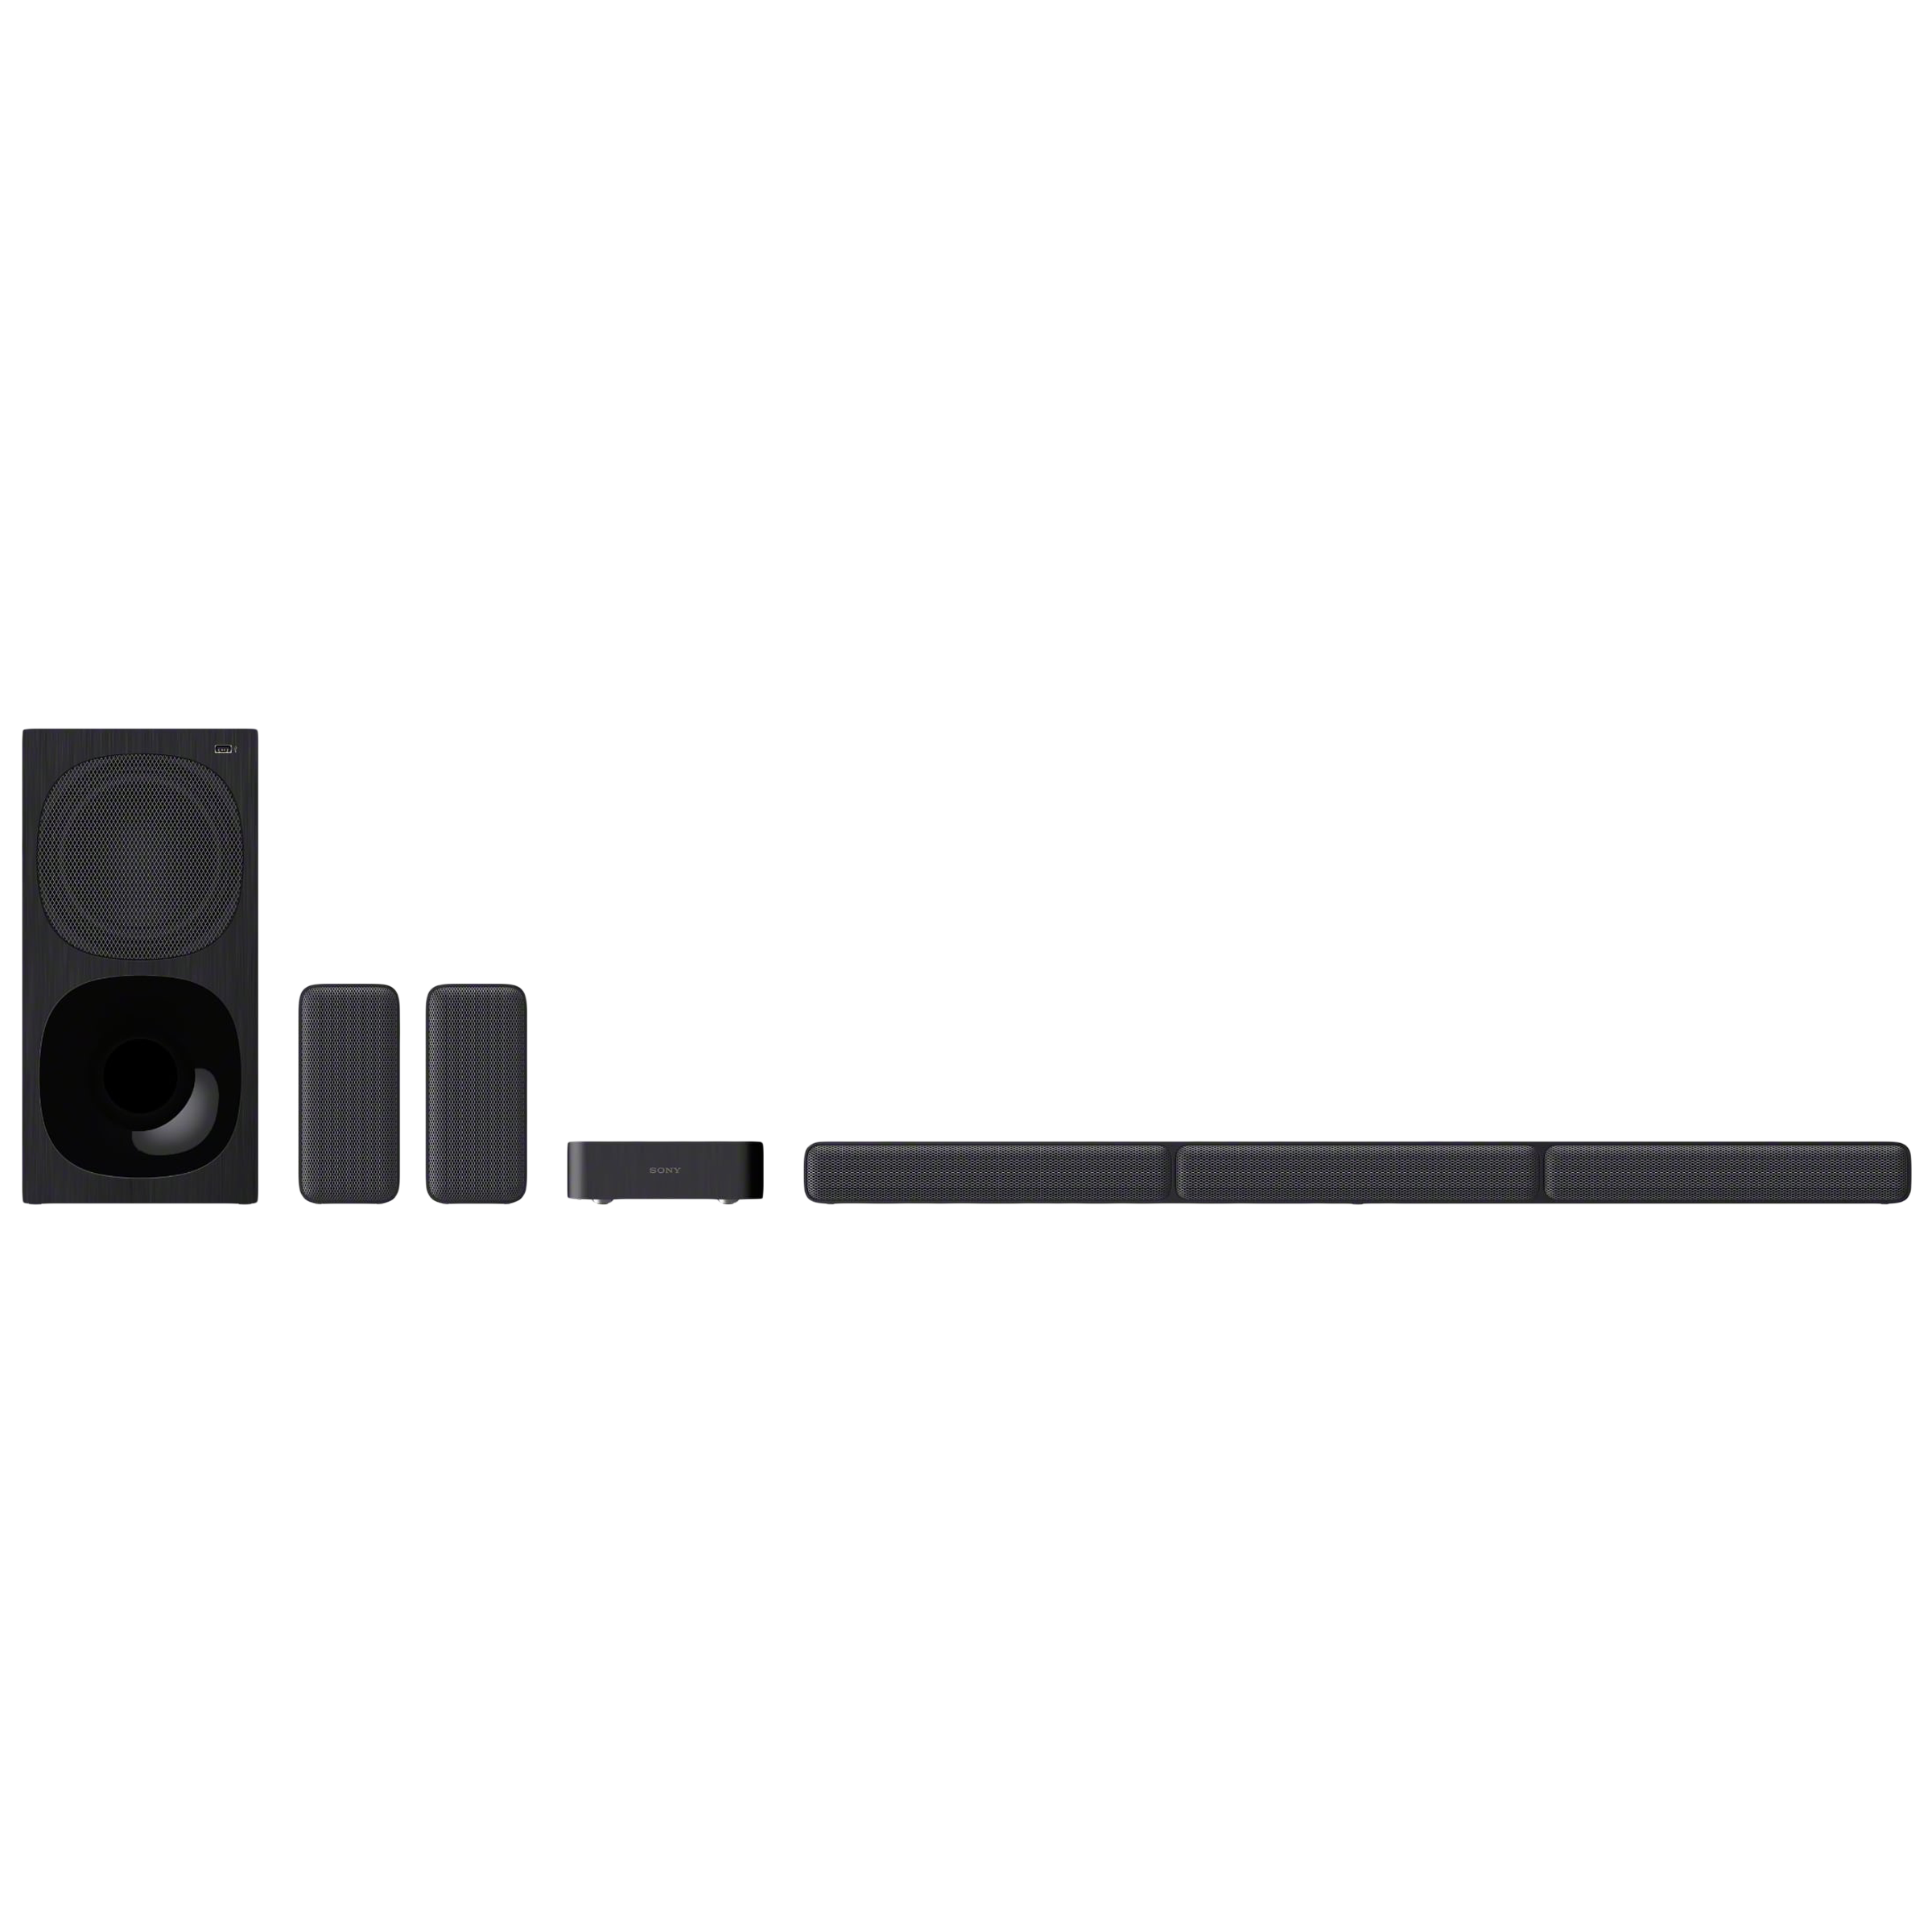 Sony HT-S40R 600 Watts 5.1 Channel Home Theater Soundbar System